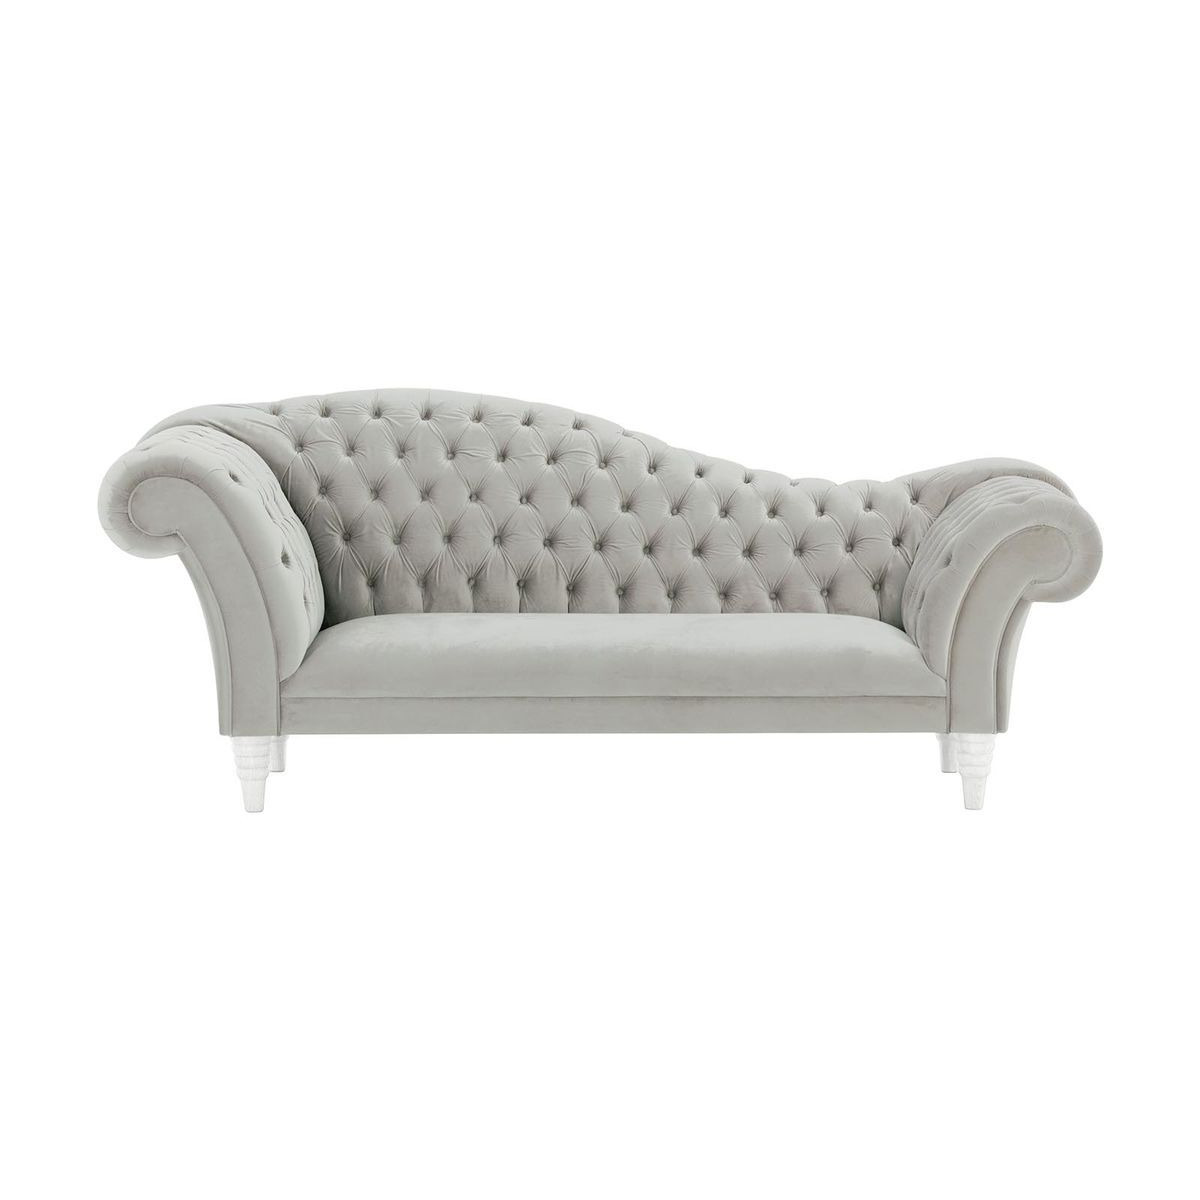 Chester Chaise Lounge Sofa, silver, Leg colour: white - image 1